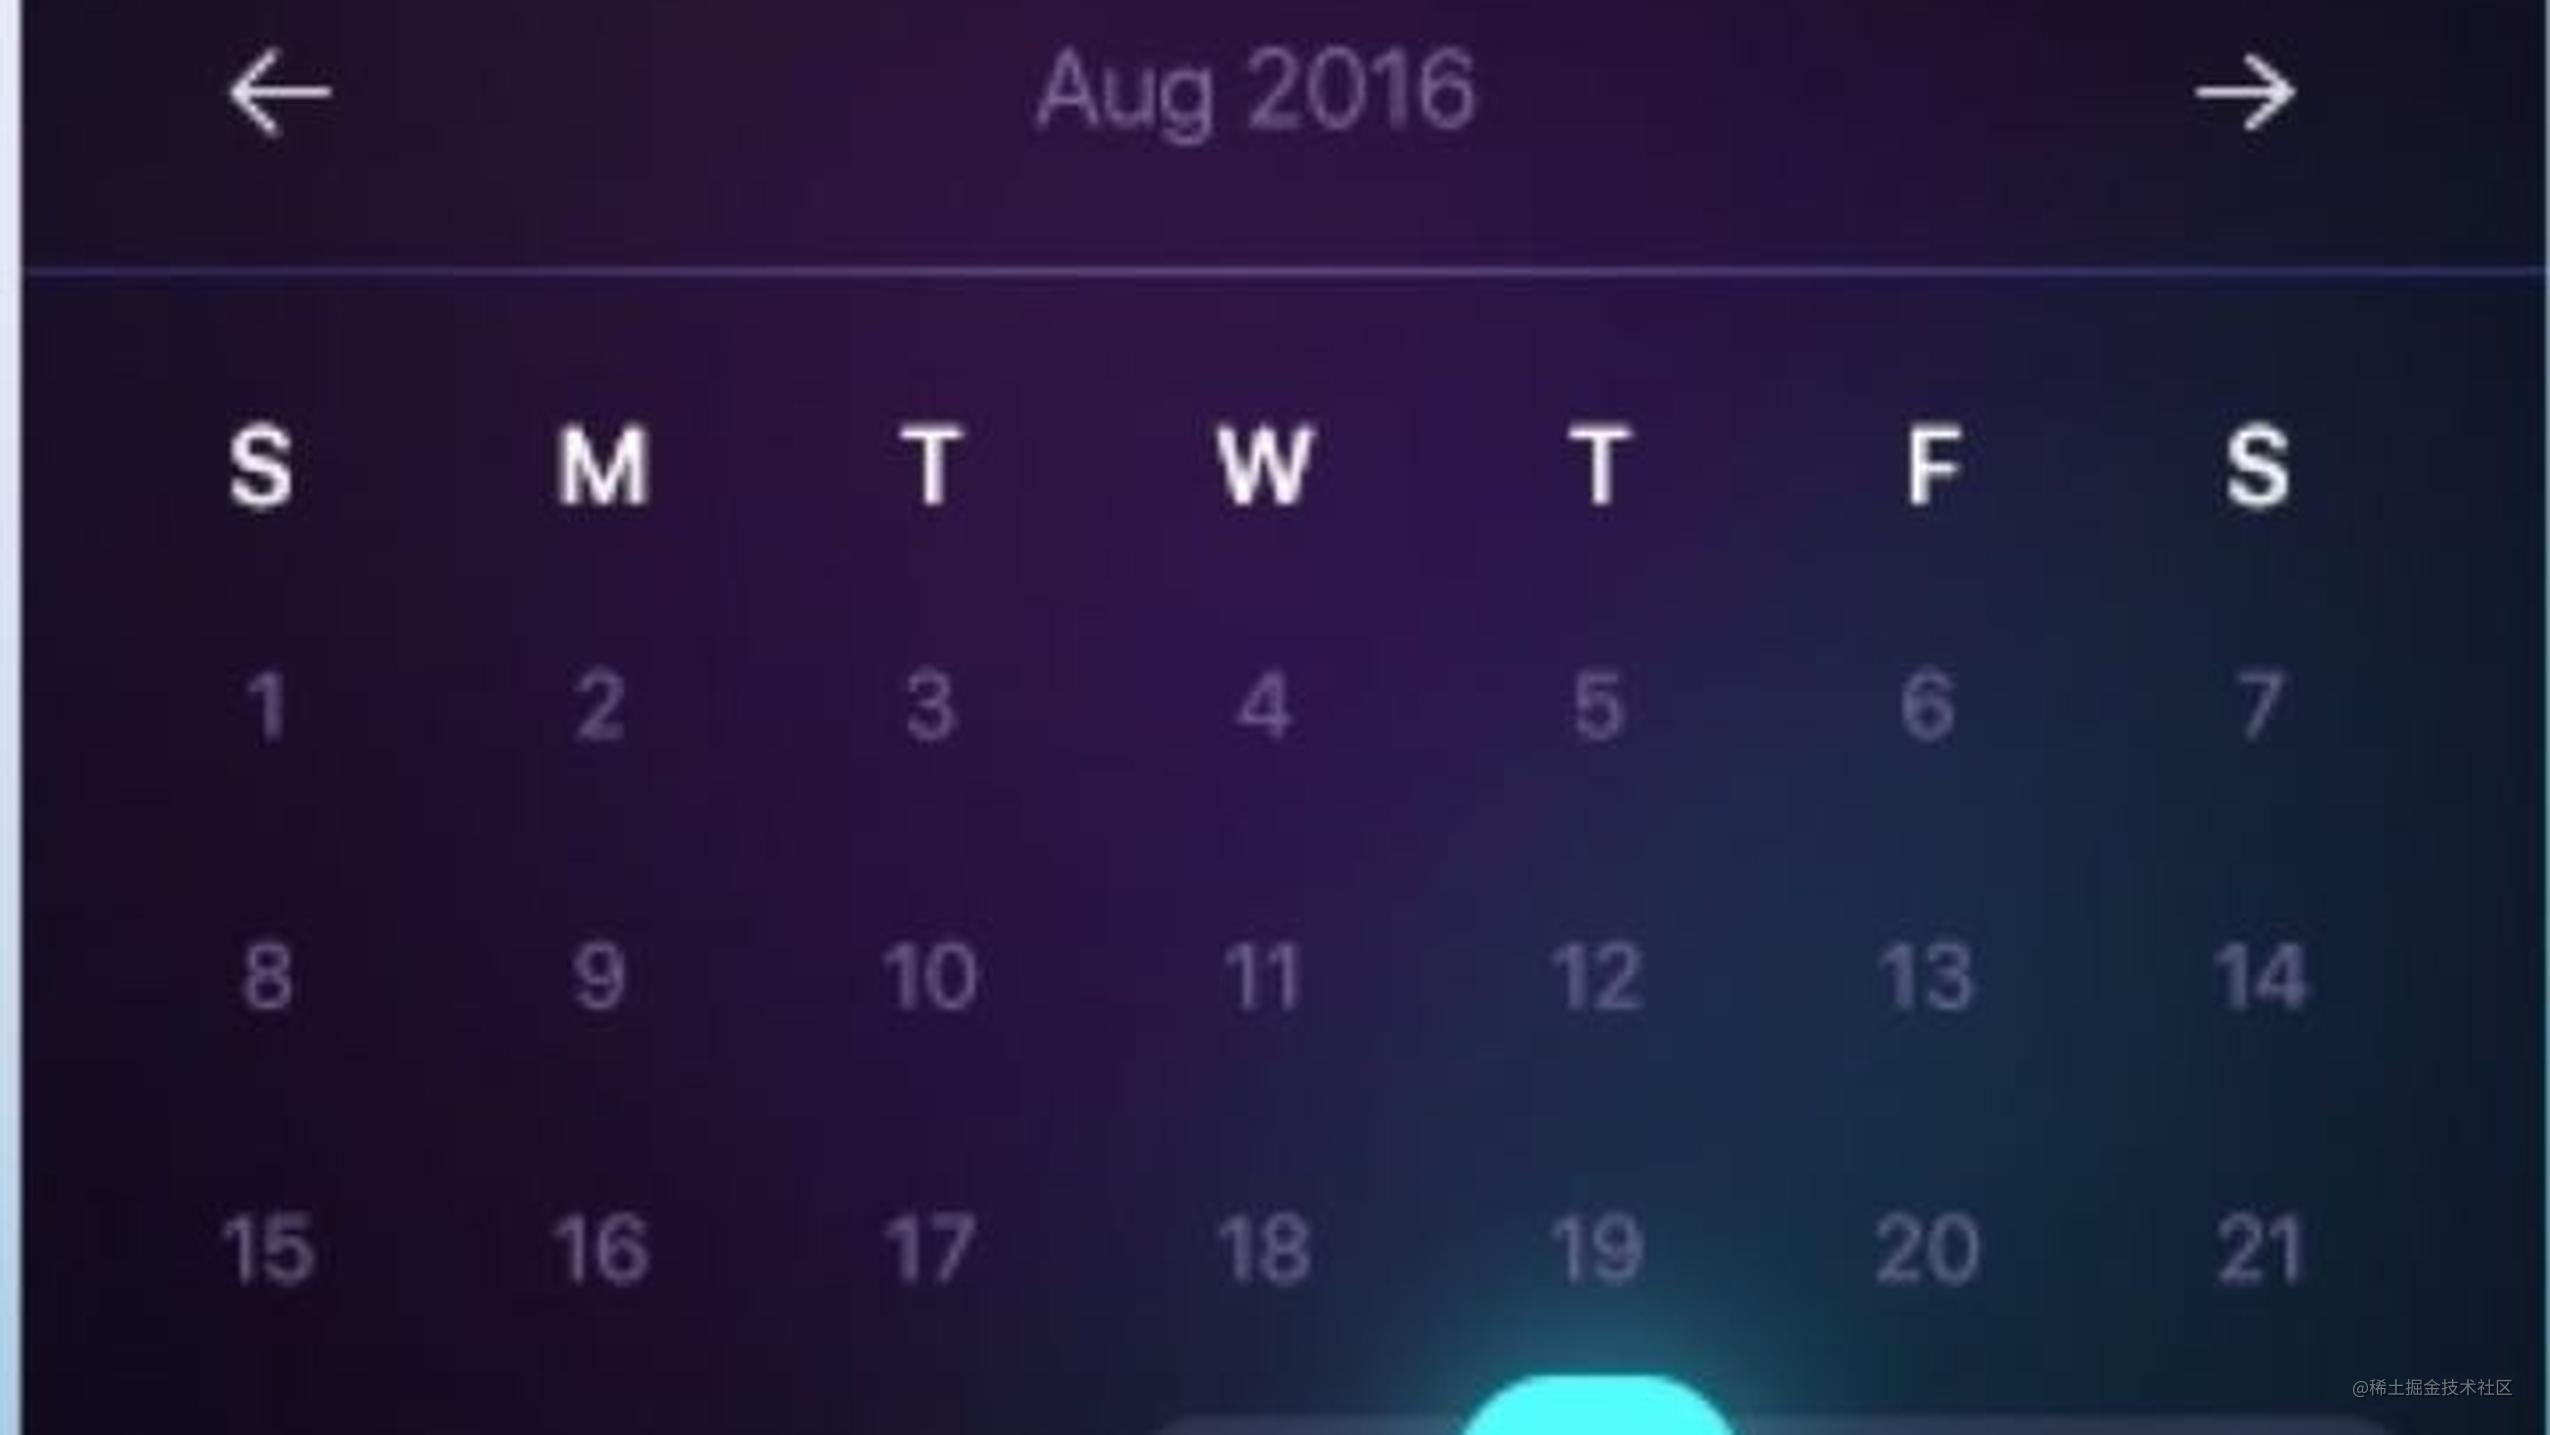 Calendar -『为移动端而生』的自定义日历